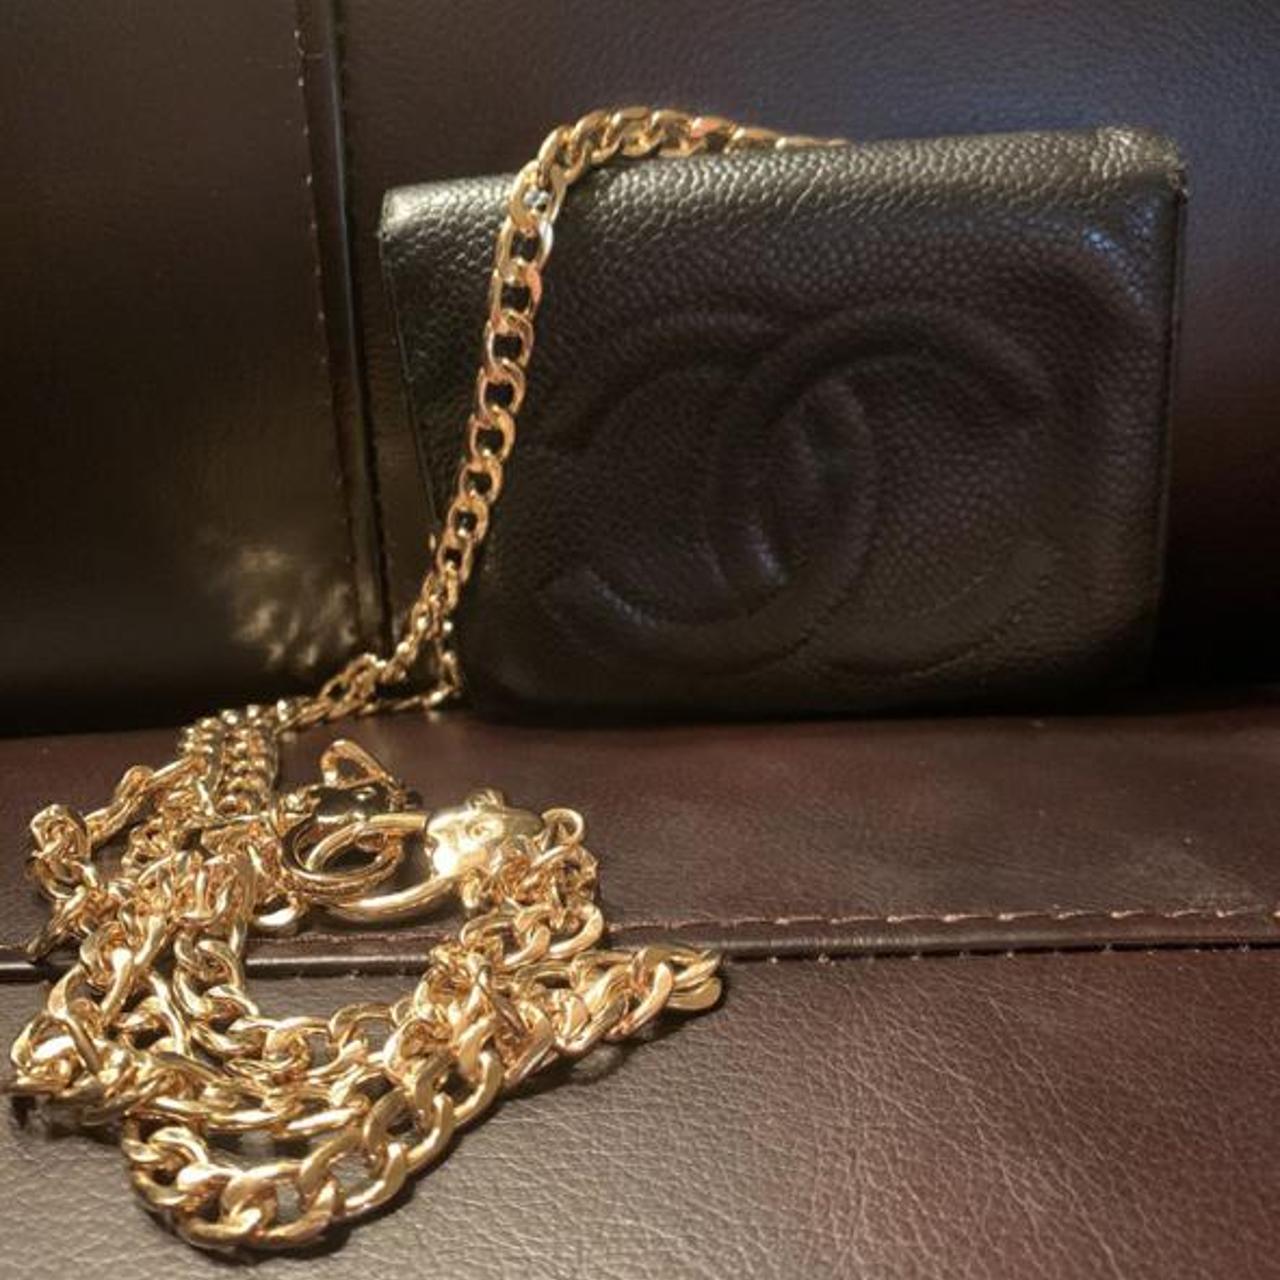 Authentic Chanel wallet, monogram CC, caviar black - Depop